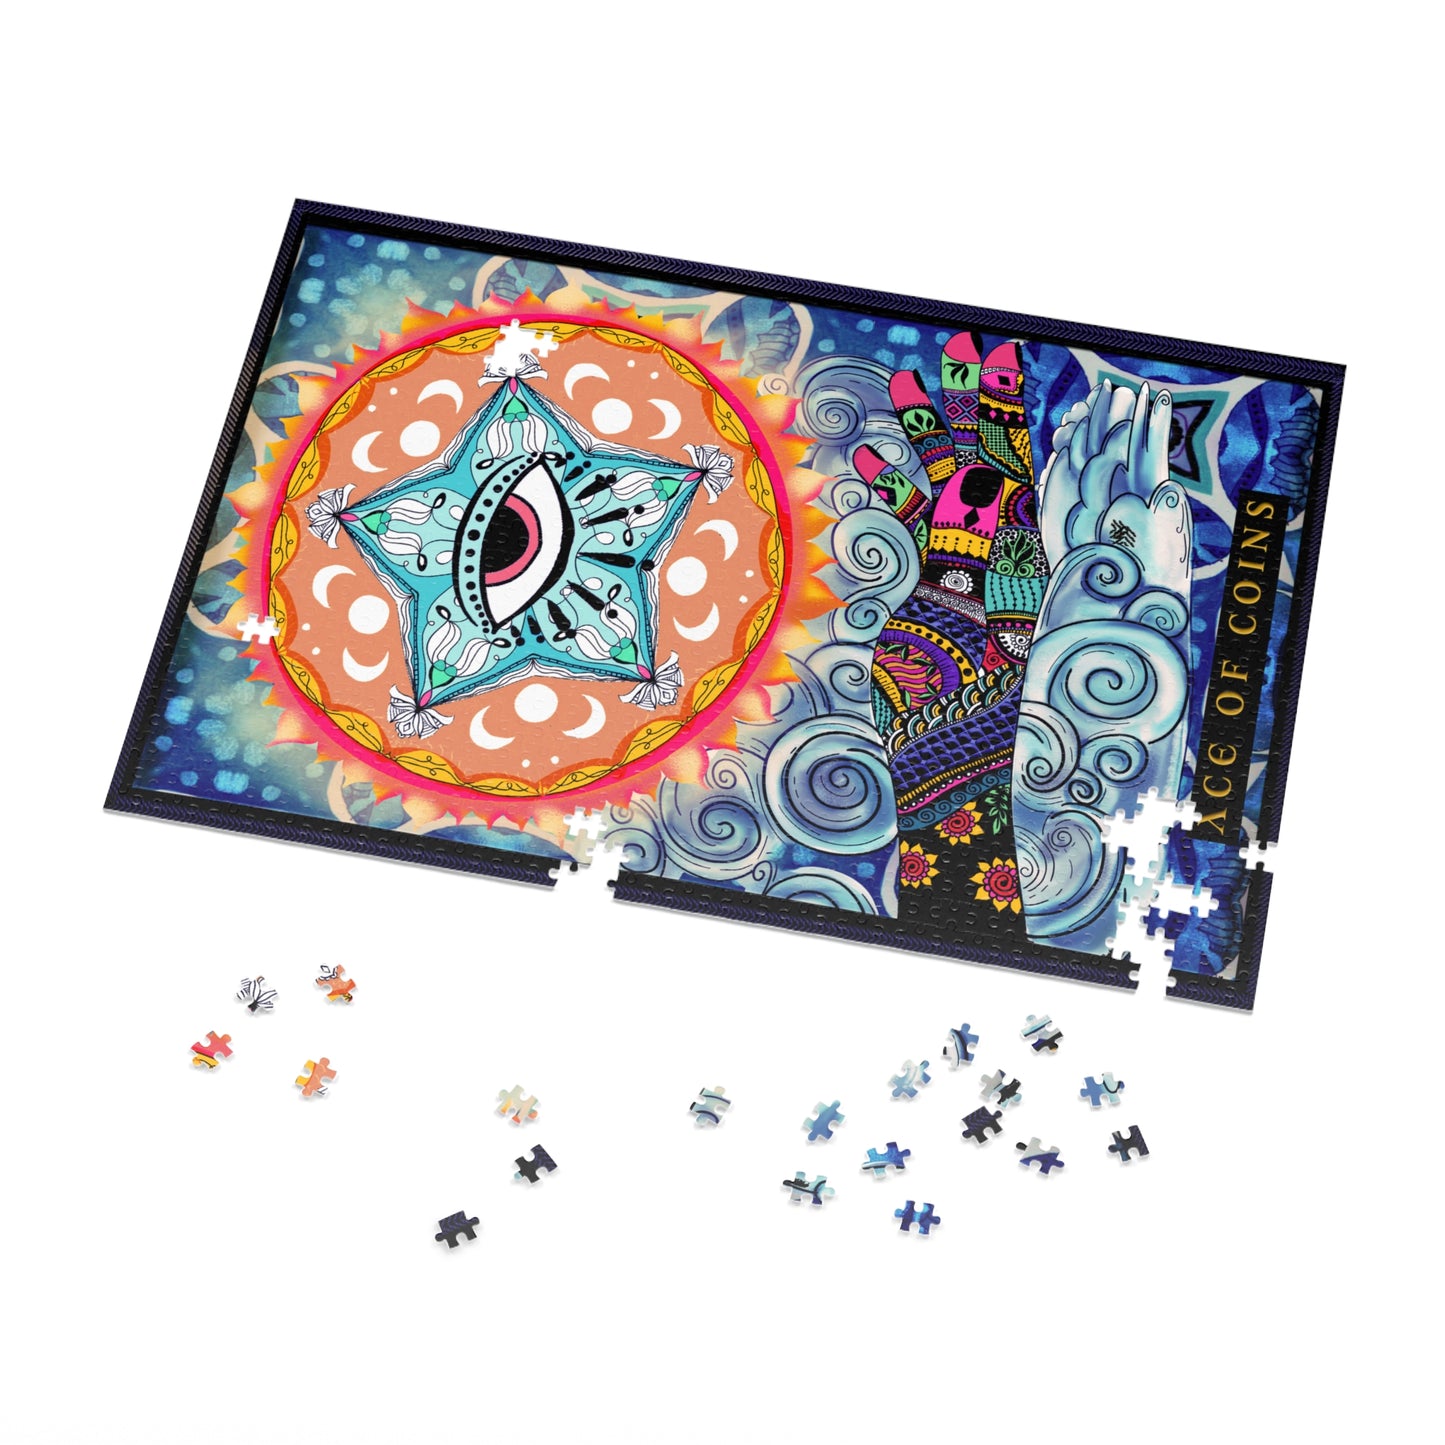 Ace of Coins Tarot Card Jigsaw Puzzle (1000-Piece) by Artist Leah Quinn